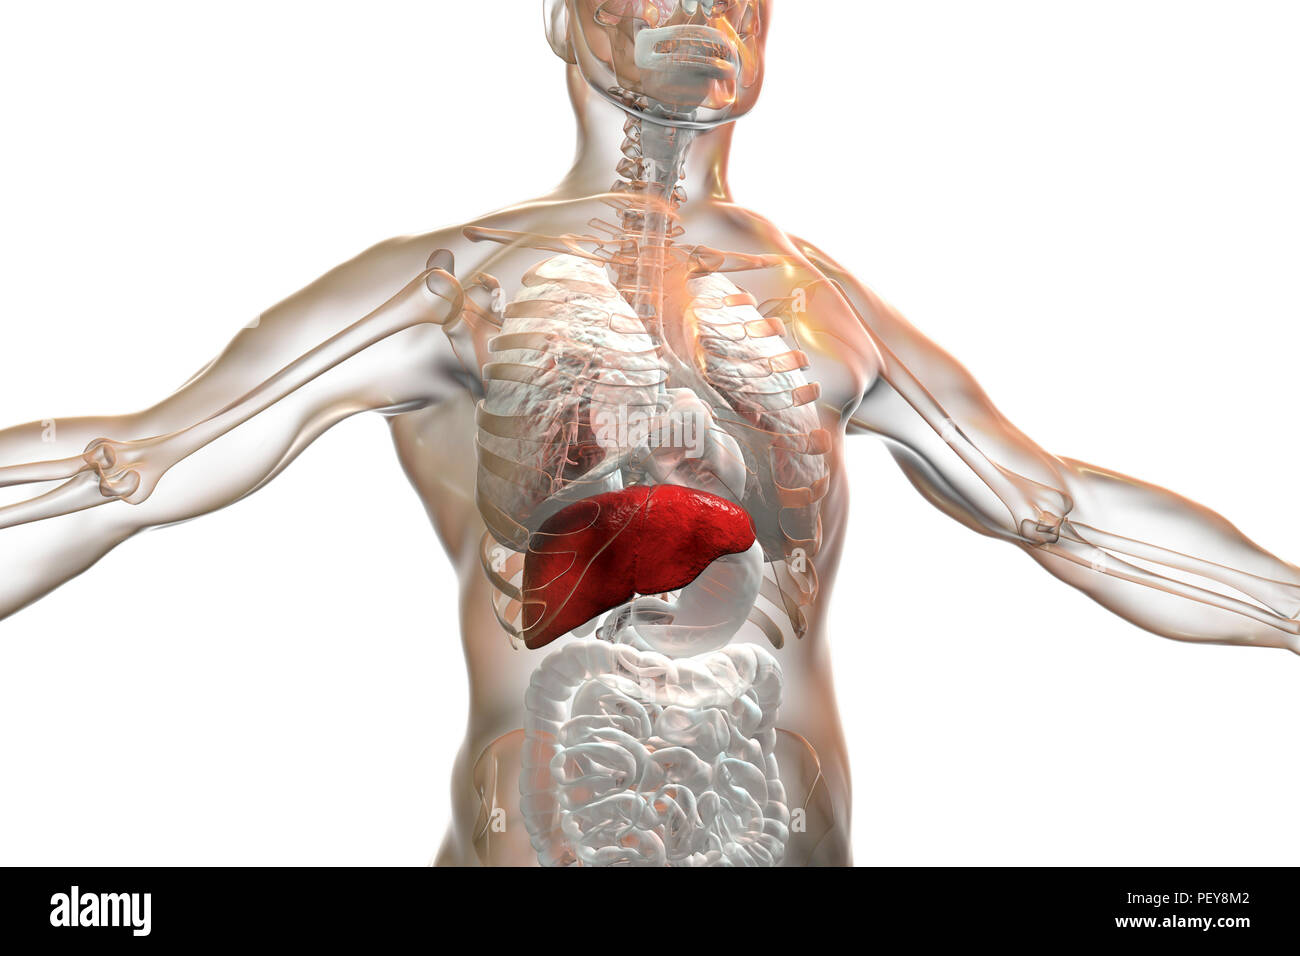 Human liver, illustration. Stock Photo